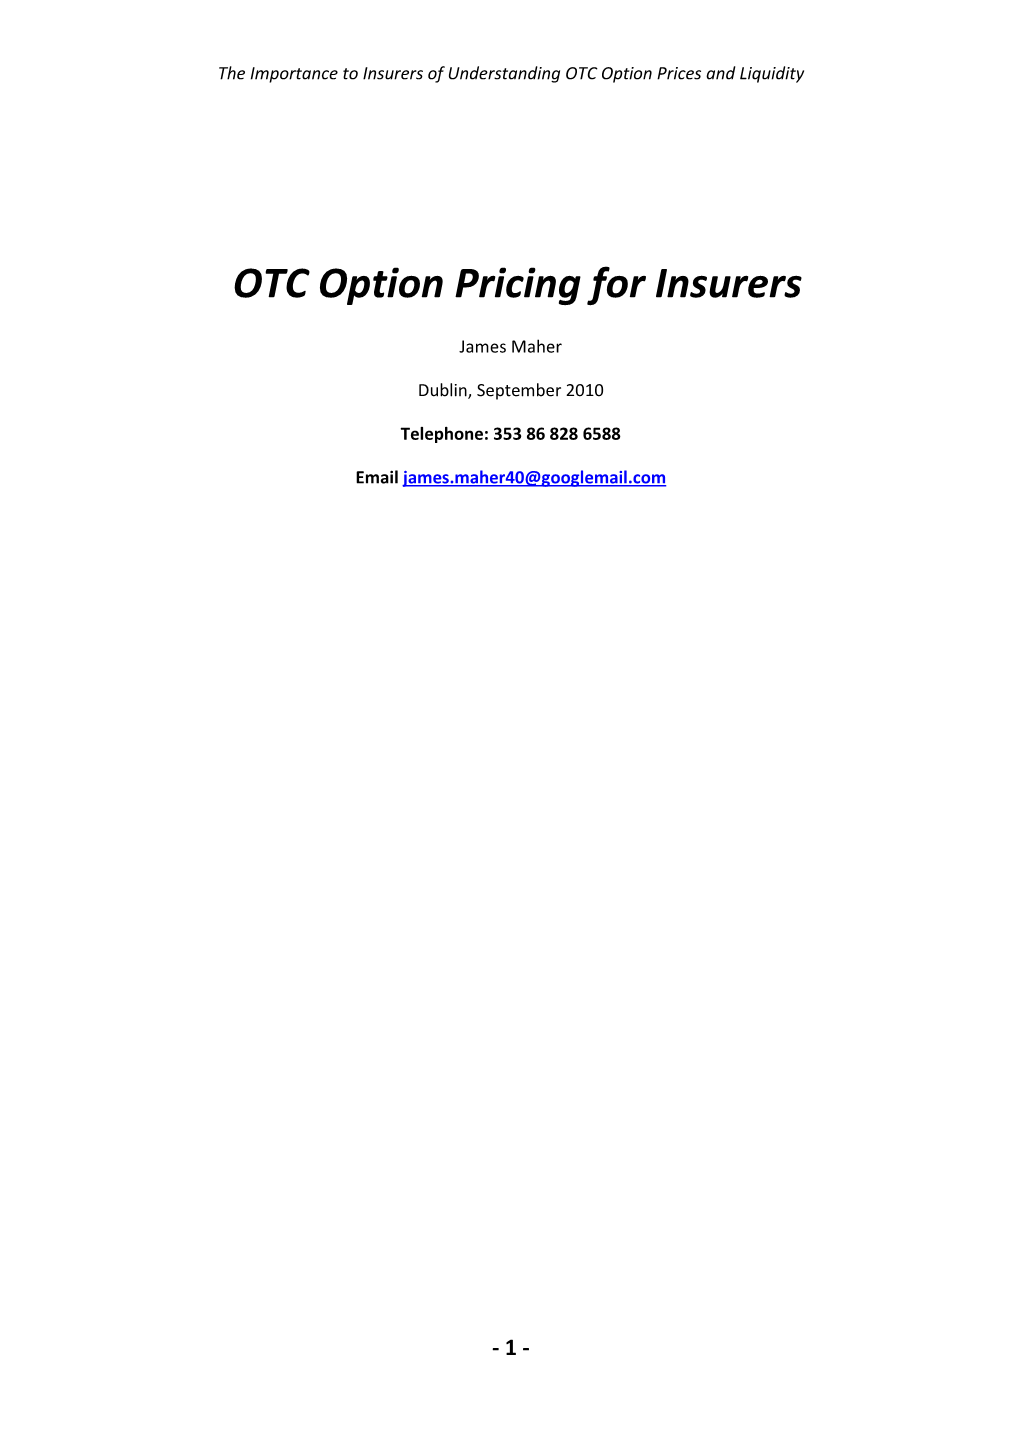 OTC Option Pricing for Insurers